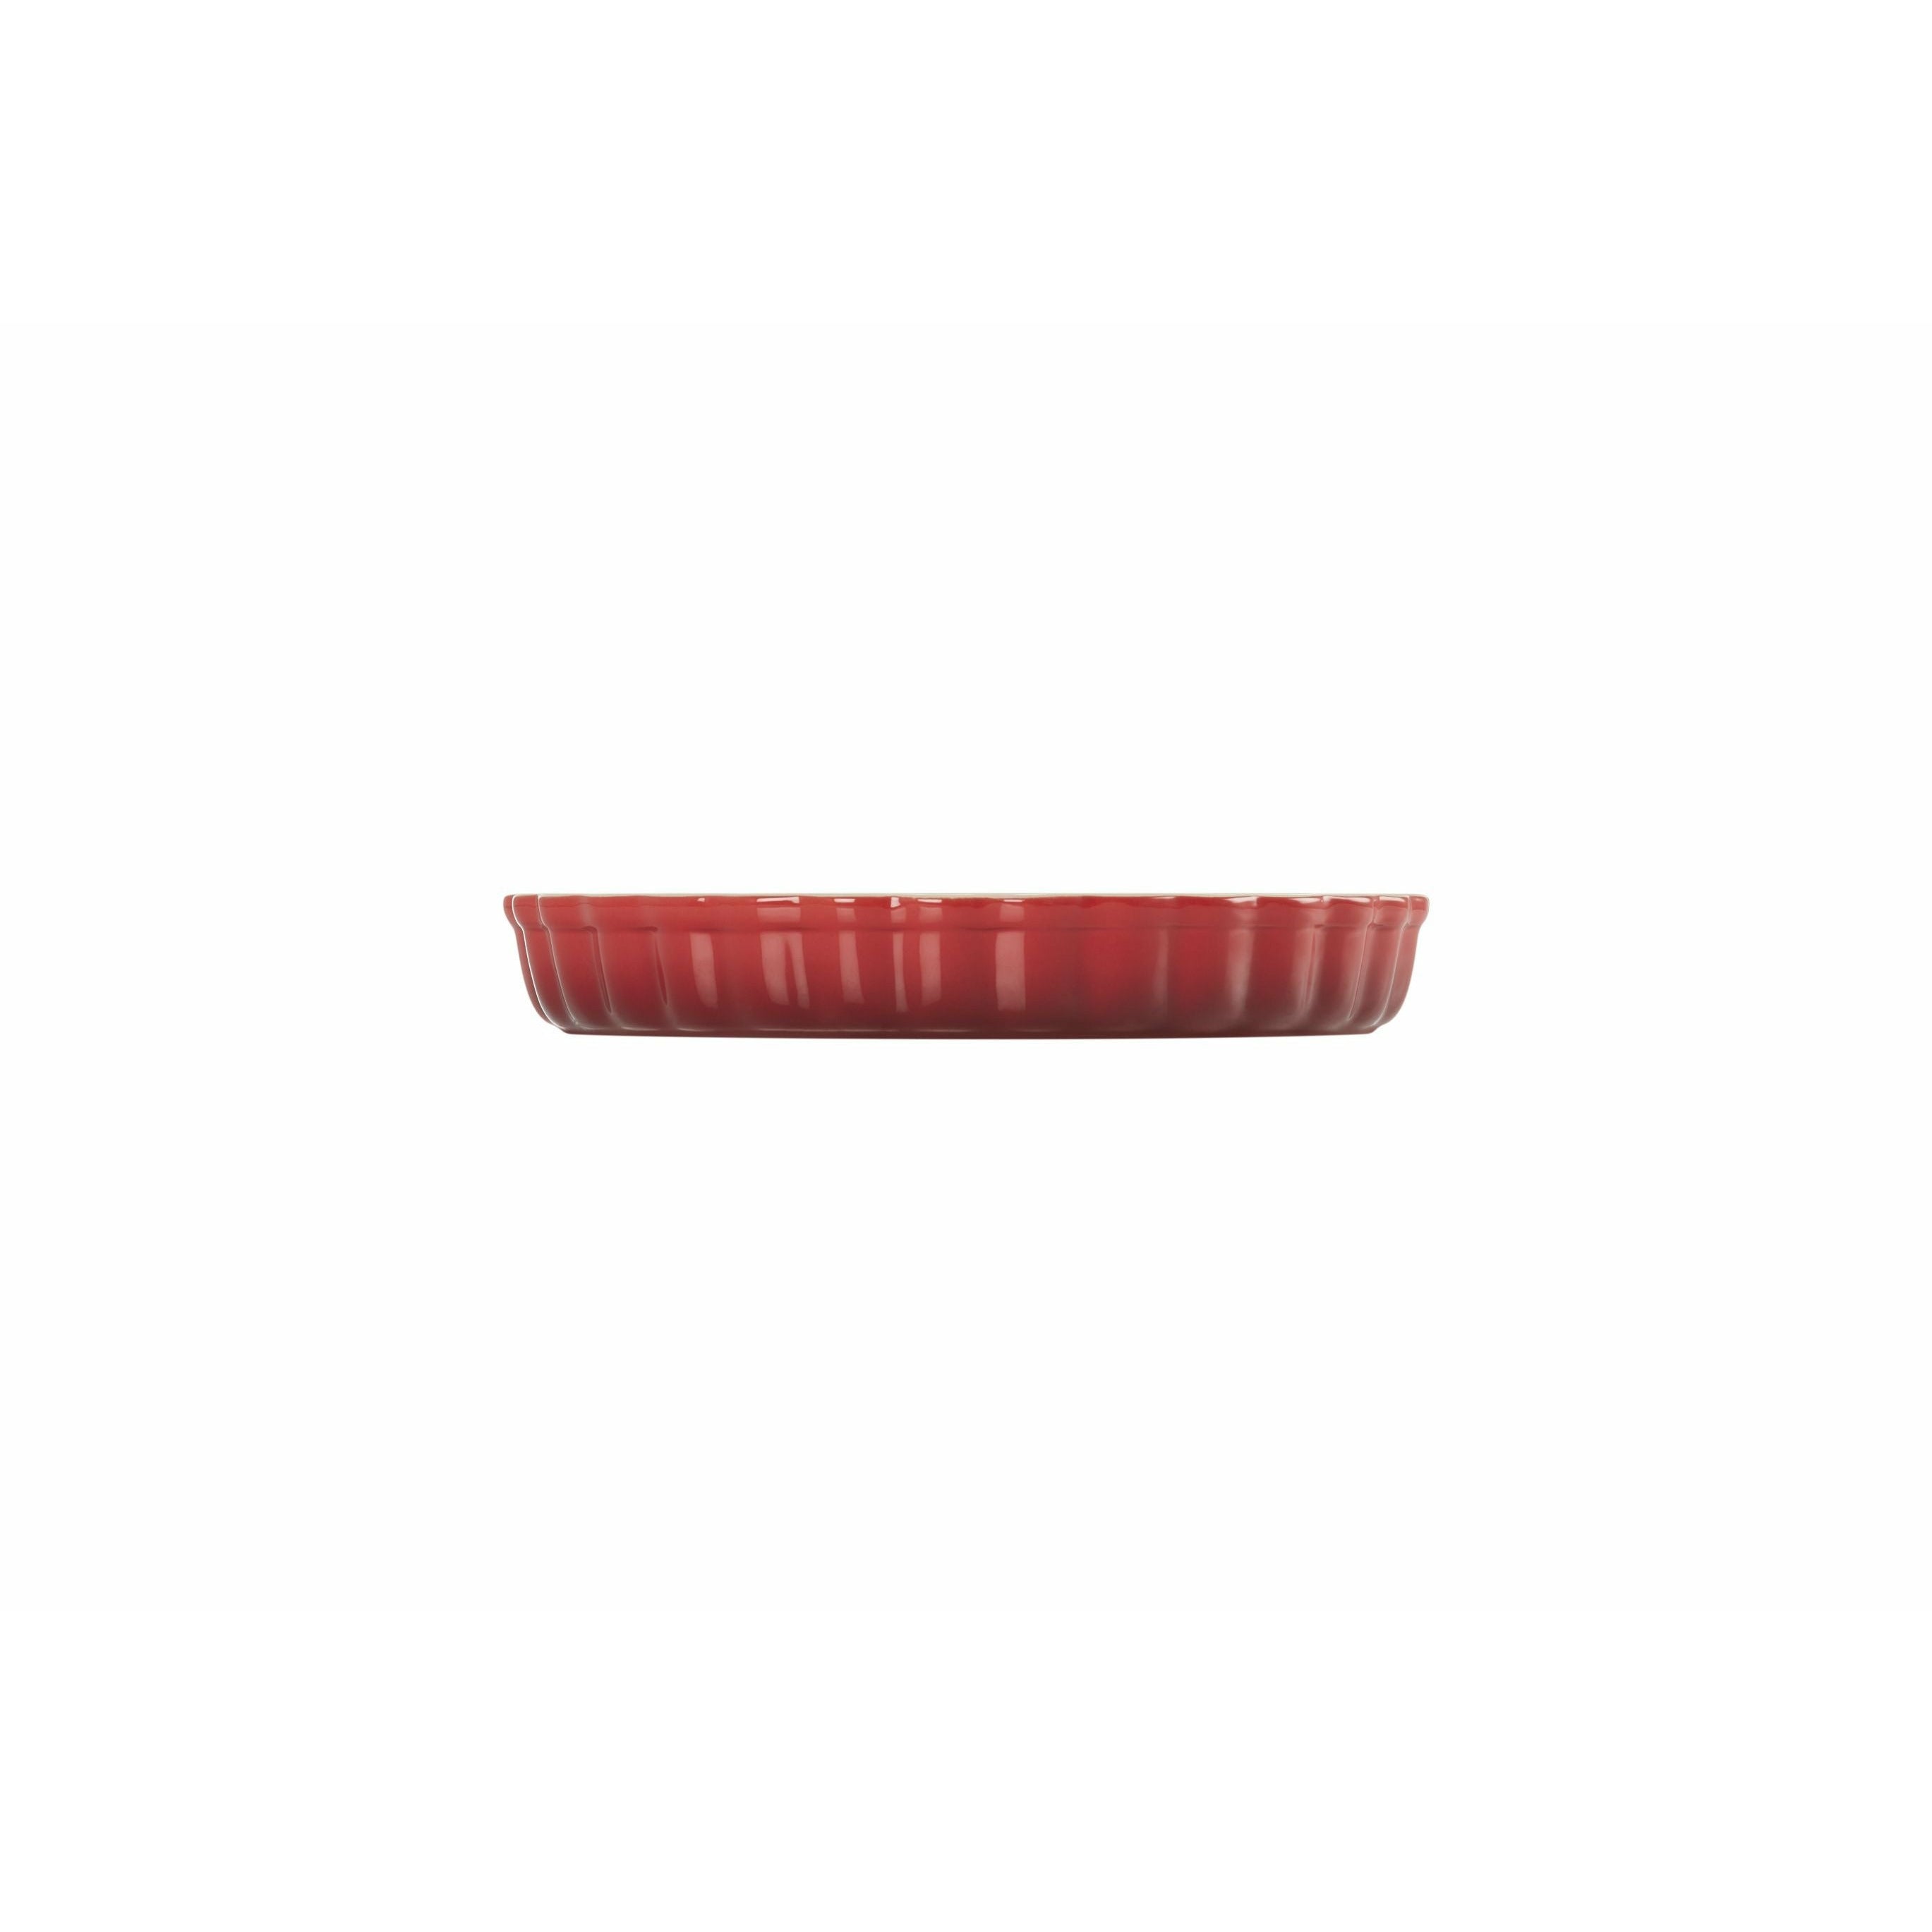 Le Creuset Heritage Cake Stagno 24 cm, rossa ciliegia